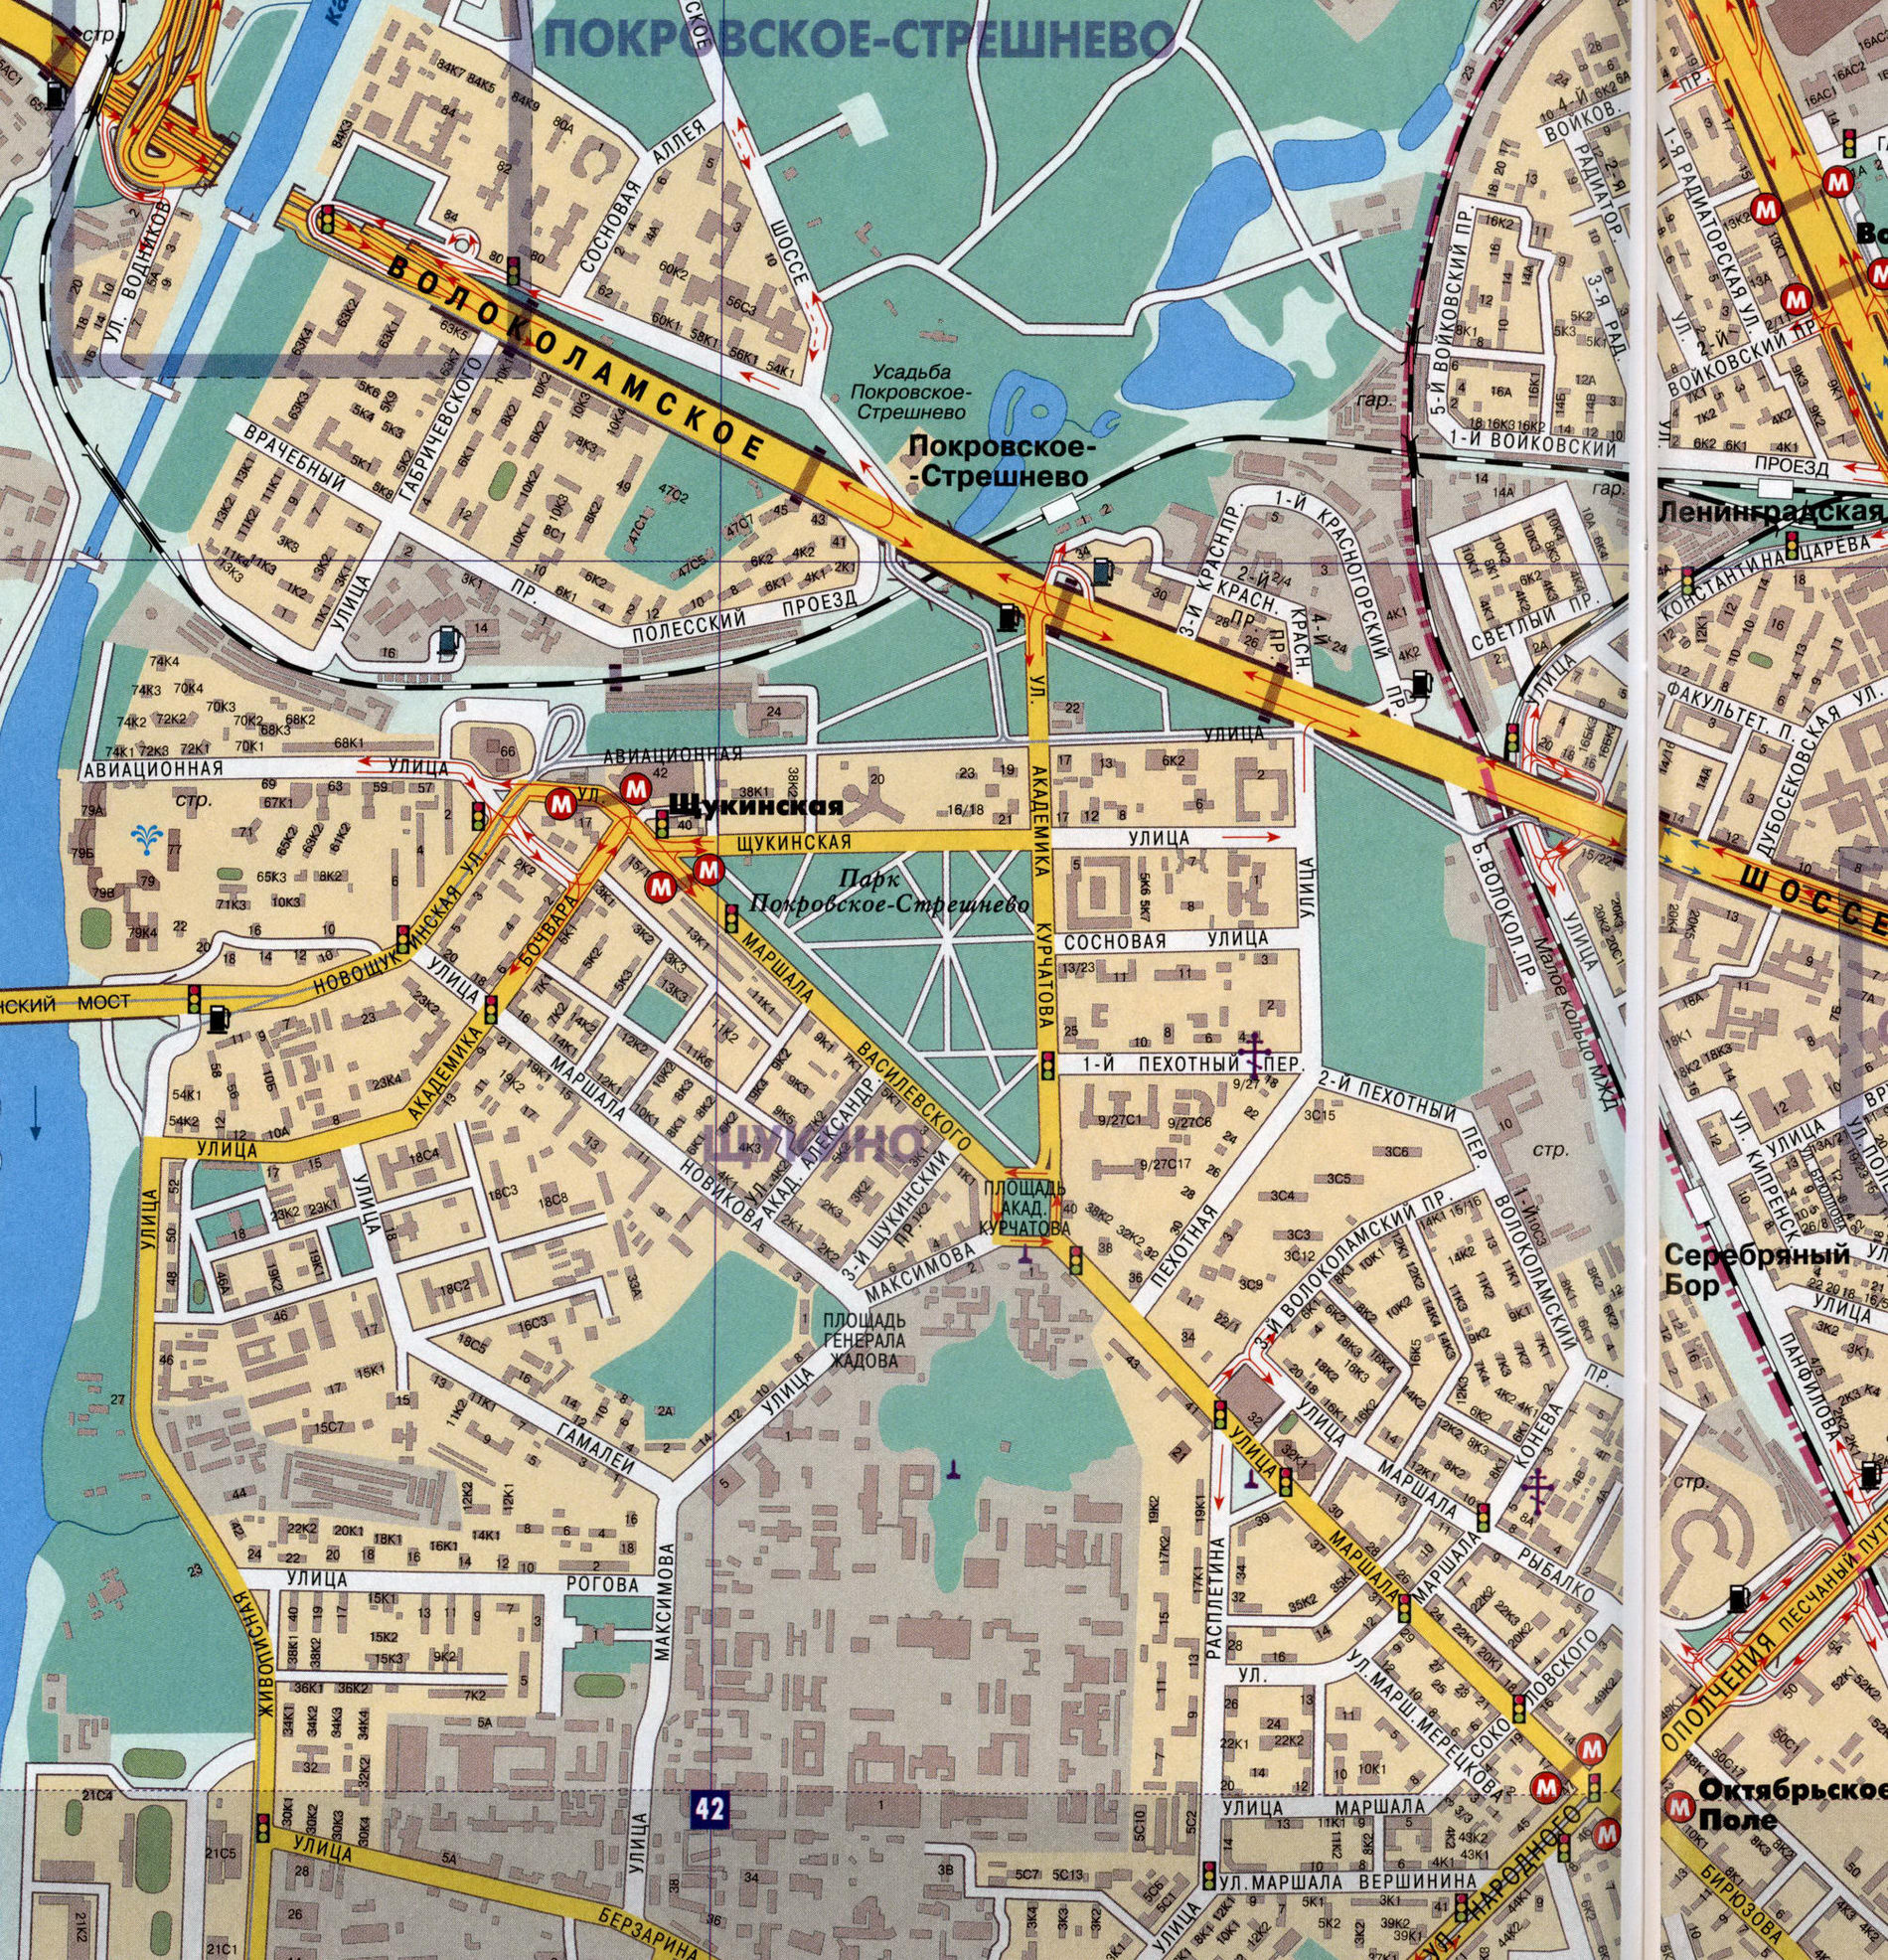 Юзао на карте Москвы с районами и районами